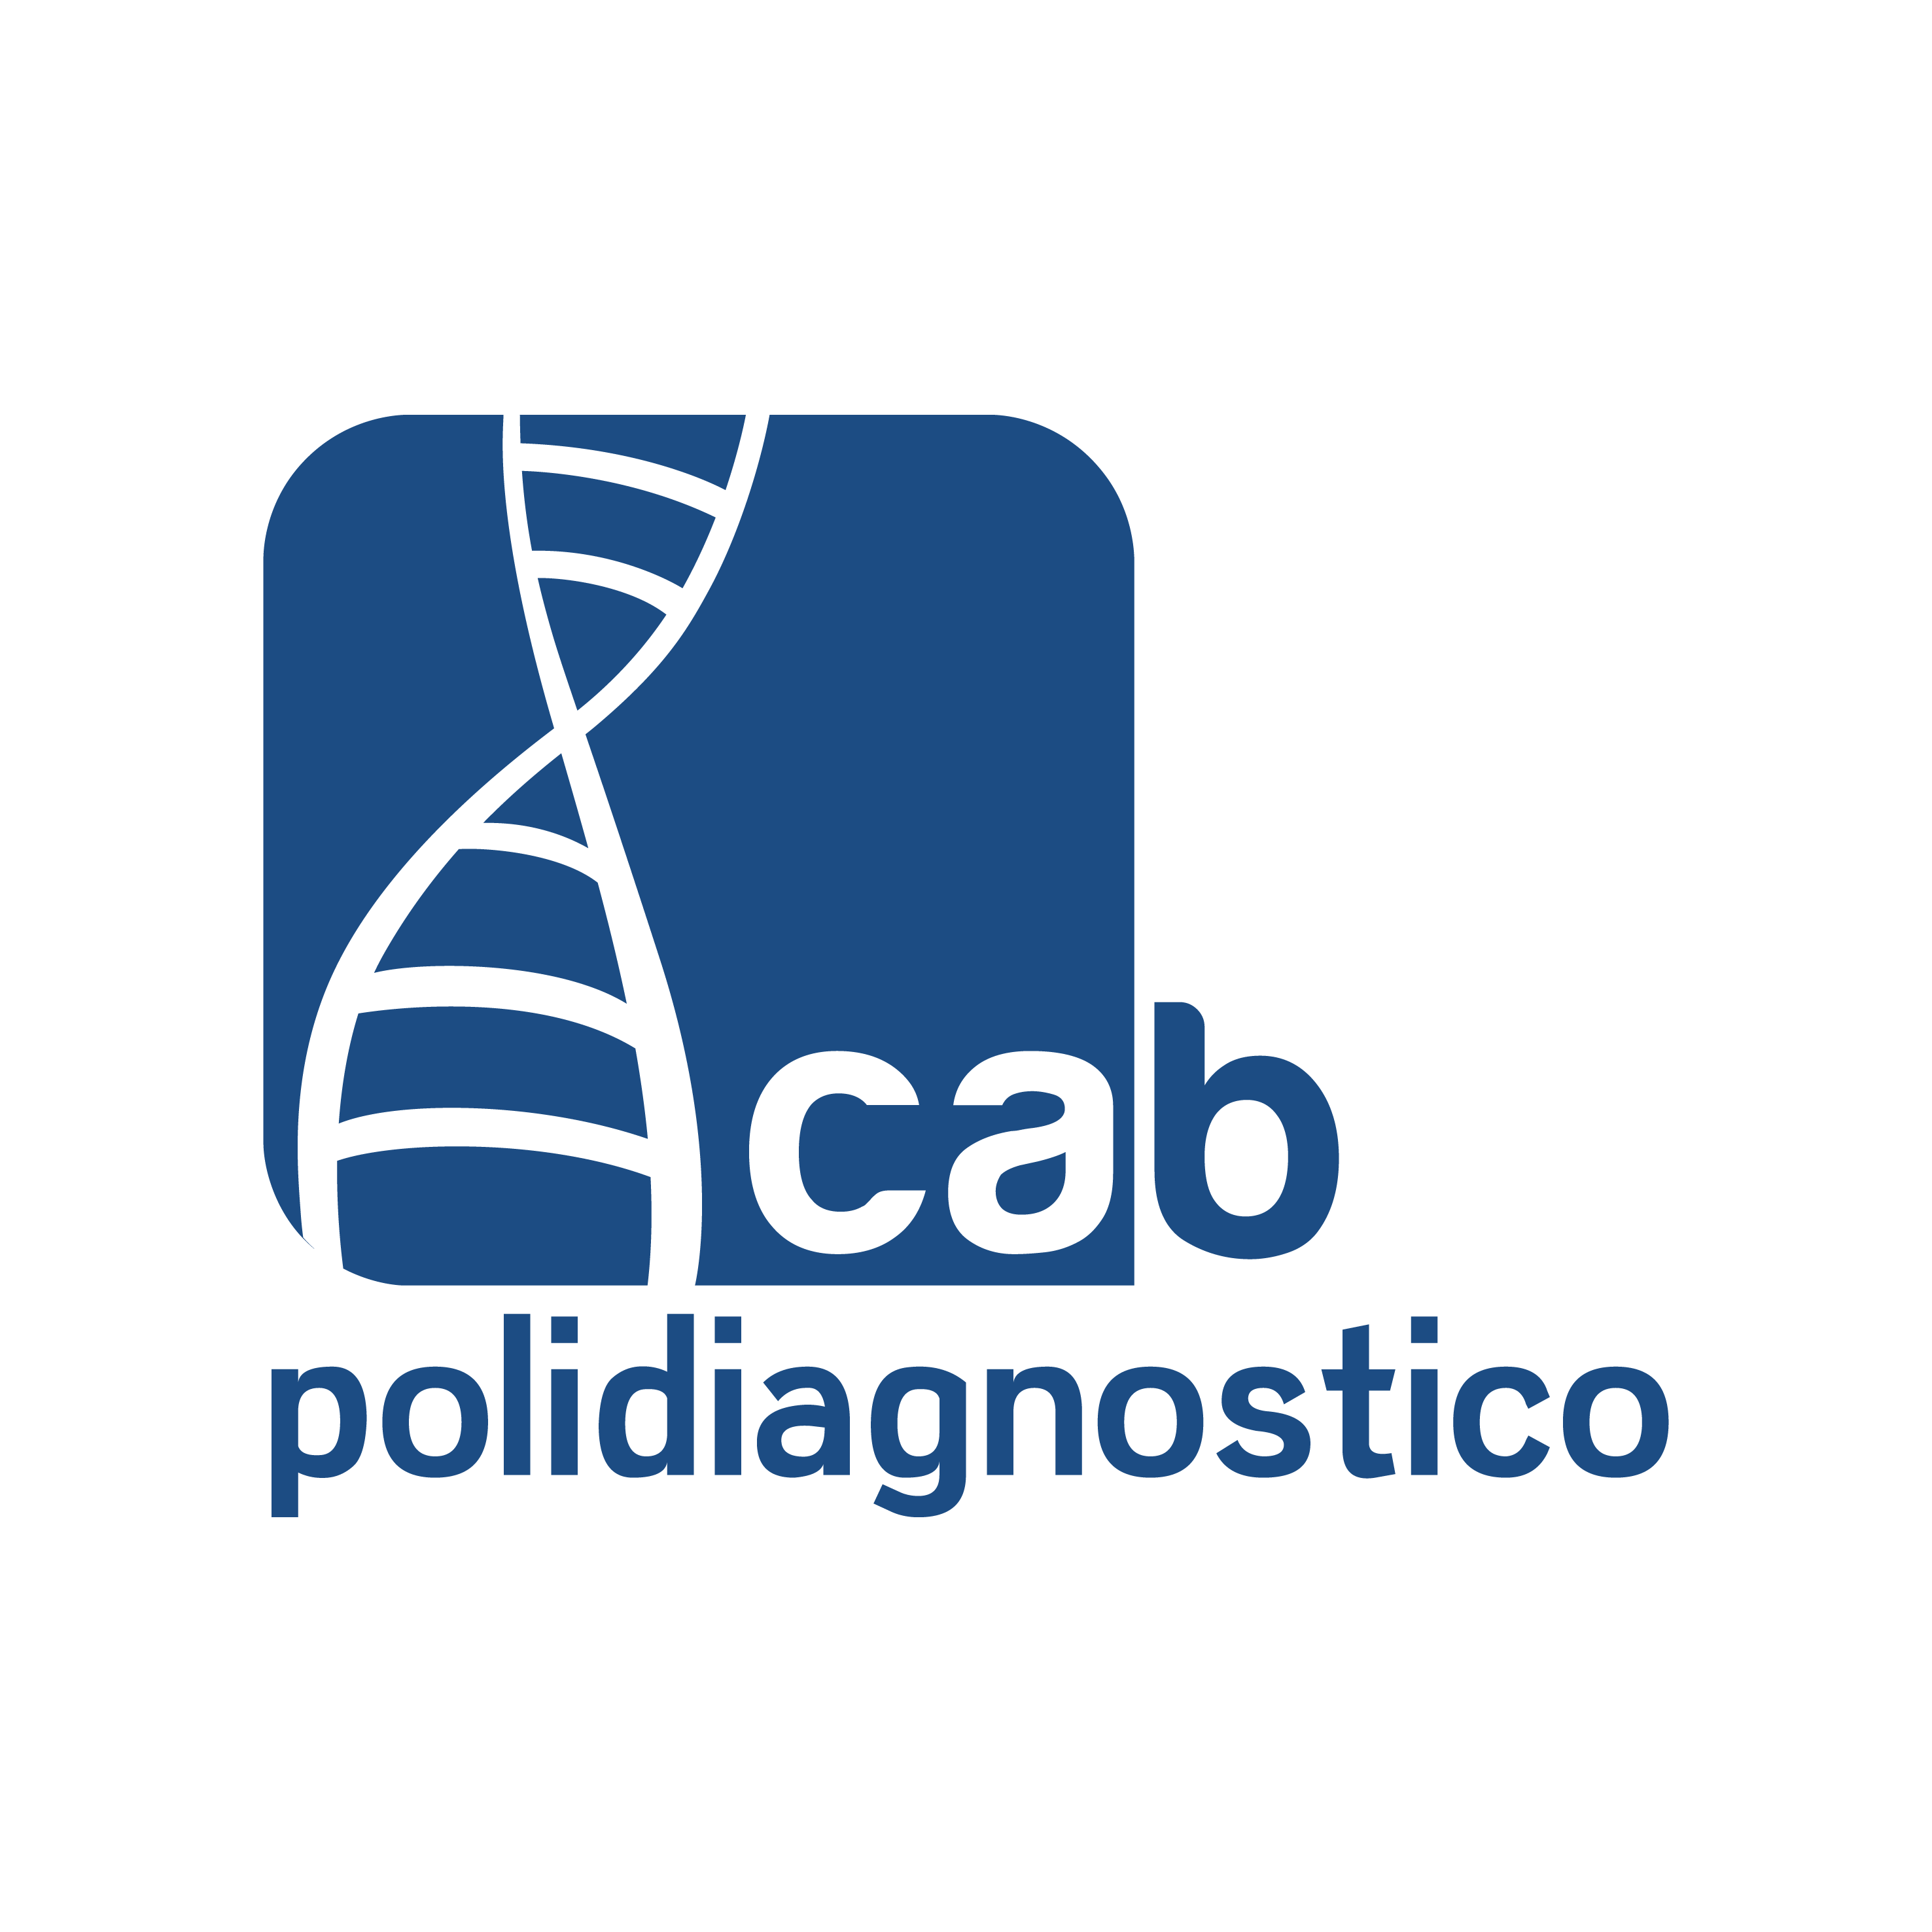 CAB_polidiagnostico_logo_blu